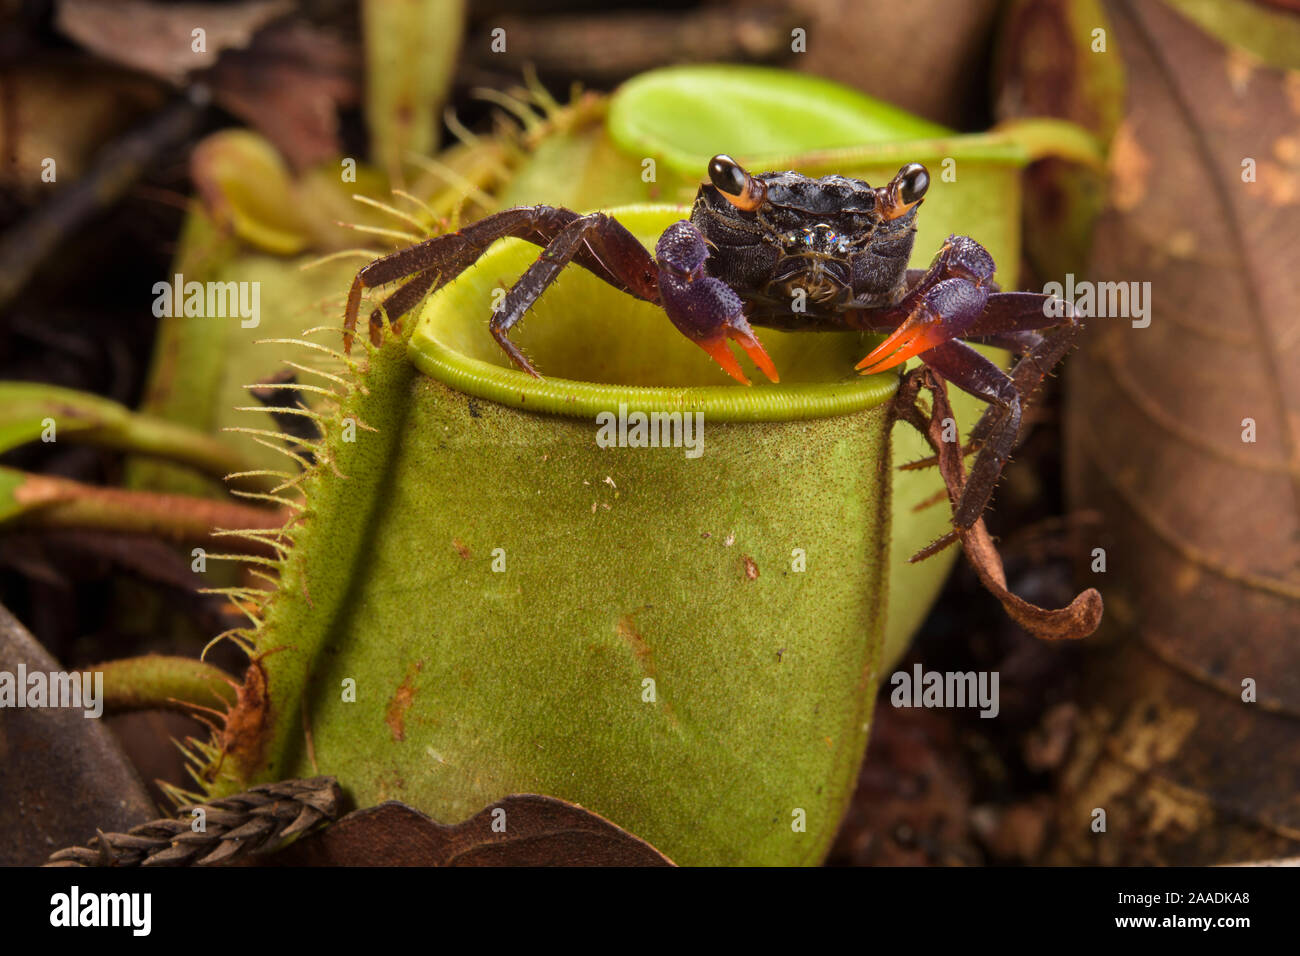 Land crab (Geosesarma sp.) which raids Pitcher plant (Nepenthes ampullaria) for prey, Sarawak, Borneo. Stock Photo